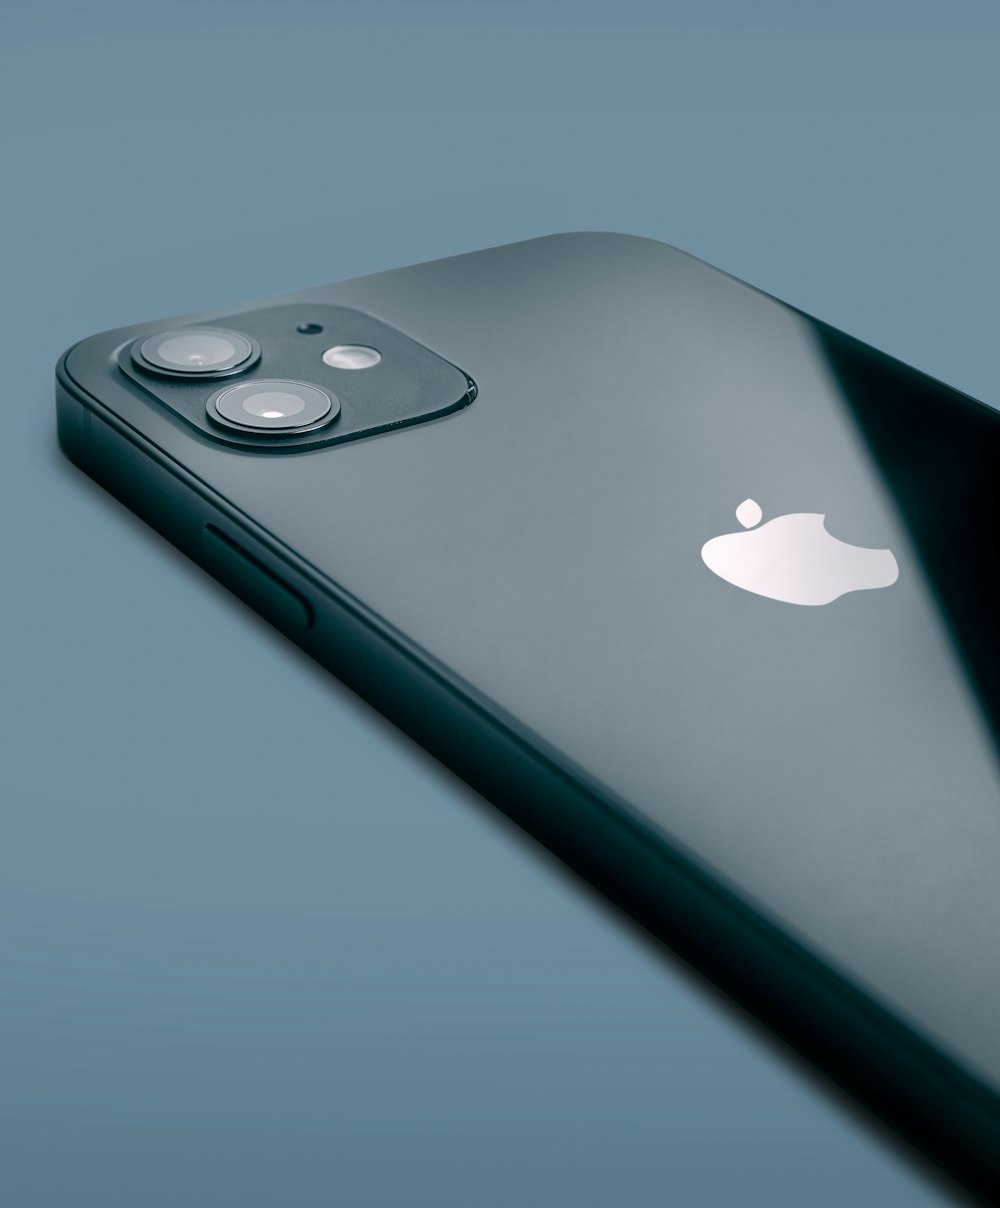 iPhone 6 argento su superficie blu